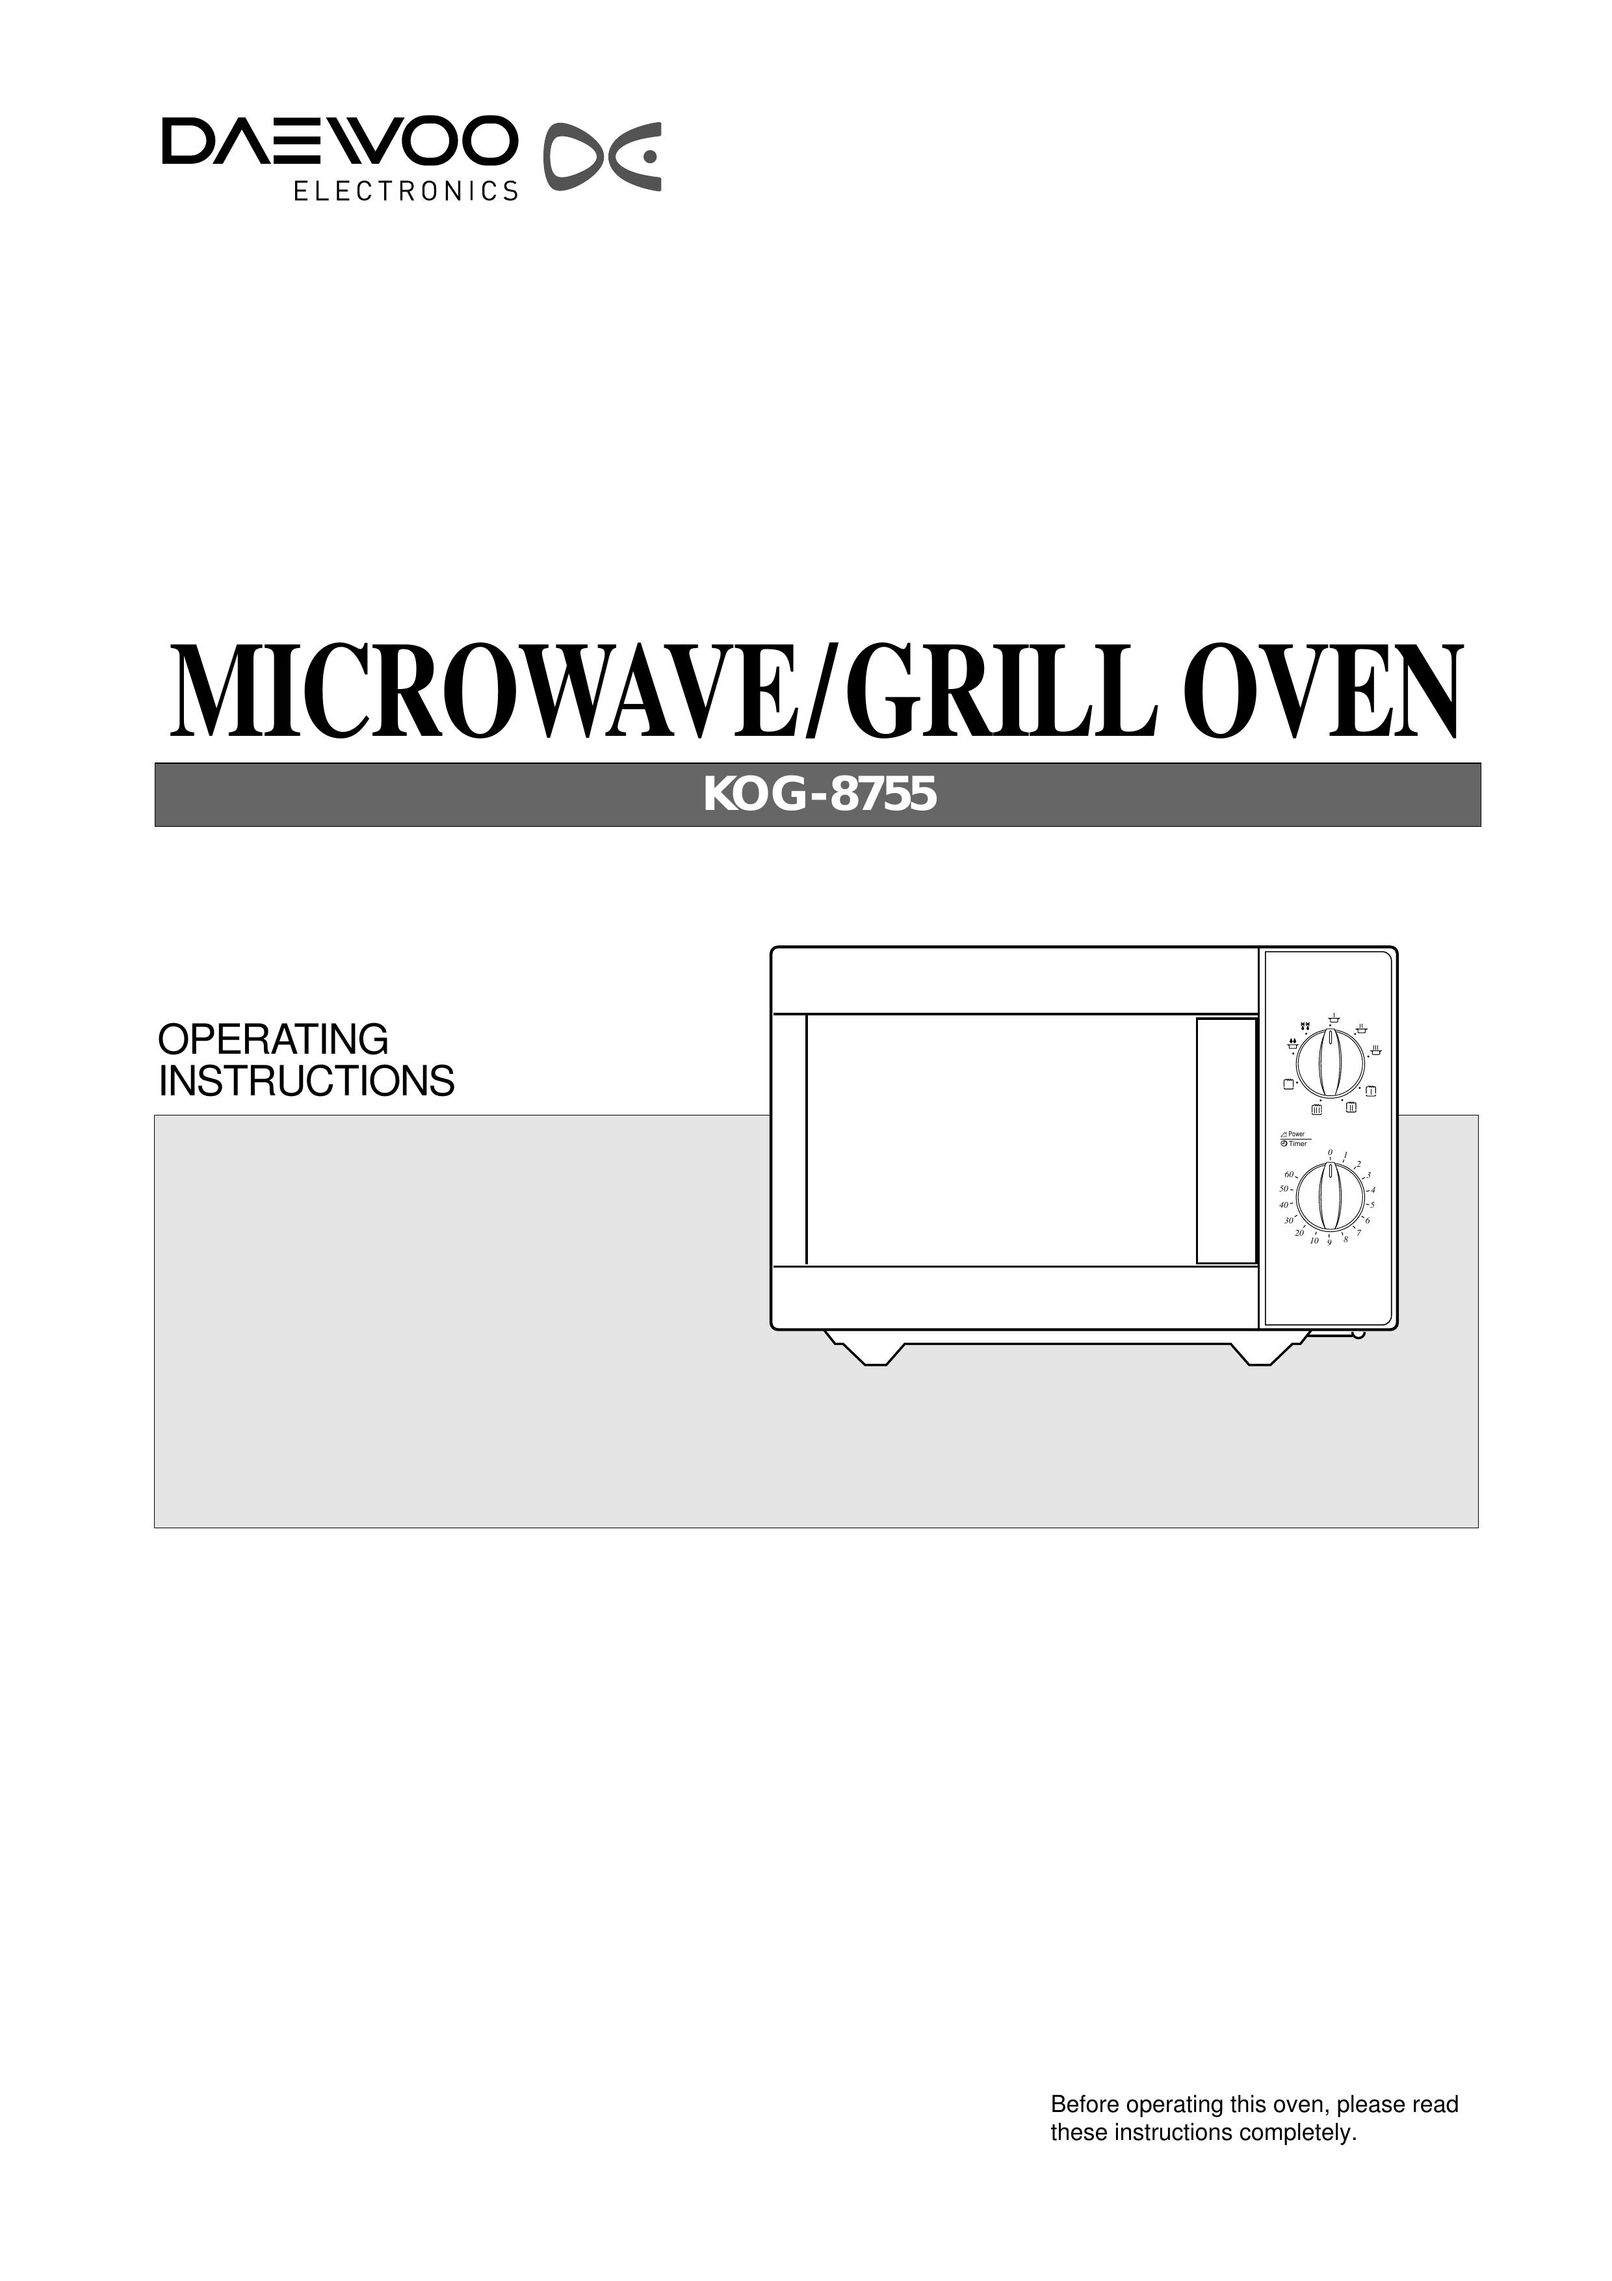 Daewoo KOG-8755 Microwave Oven User Manual